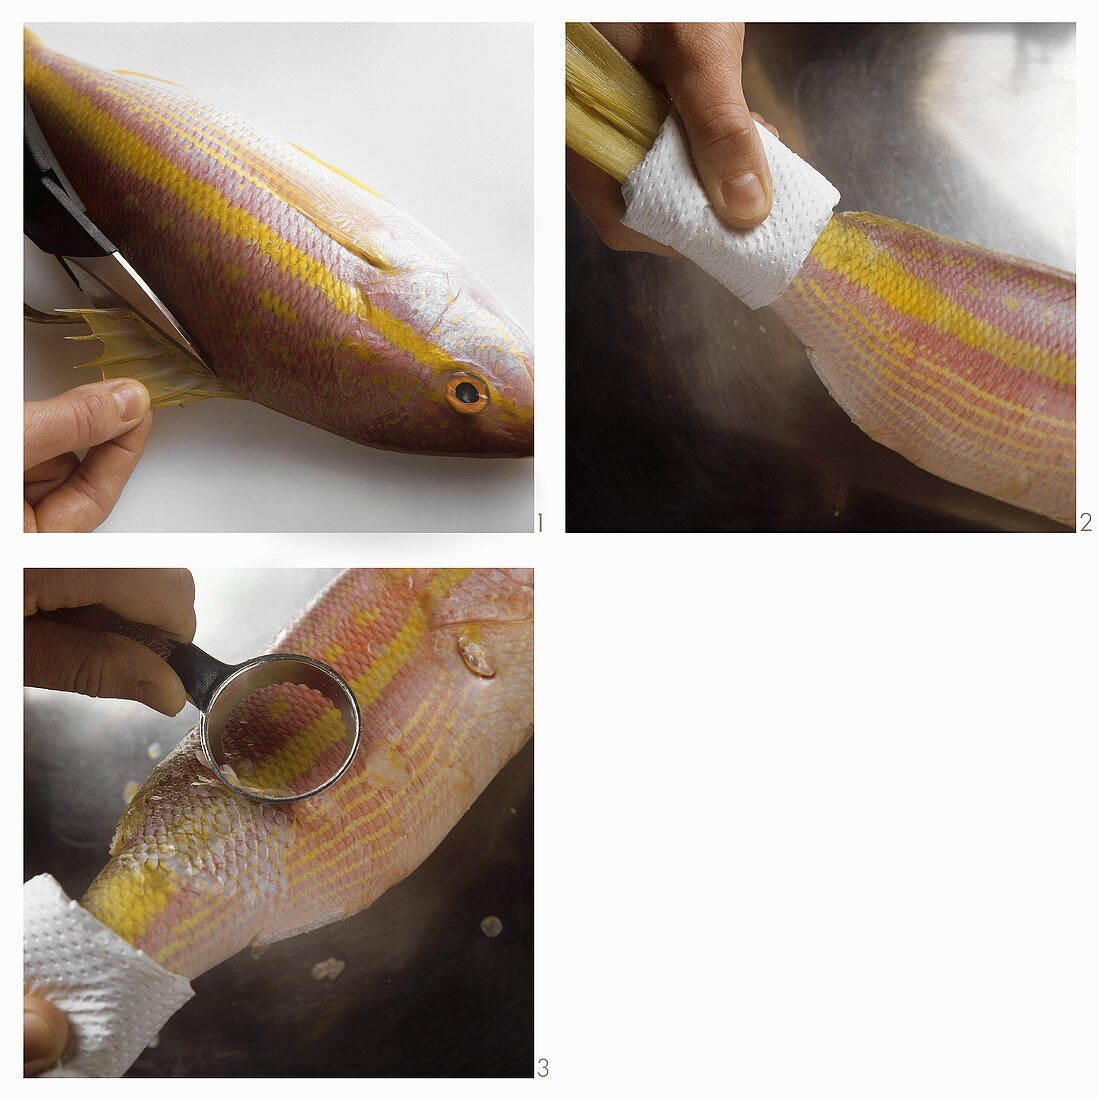 Scaling fish